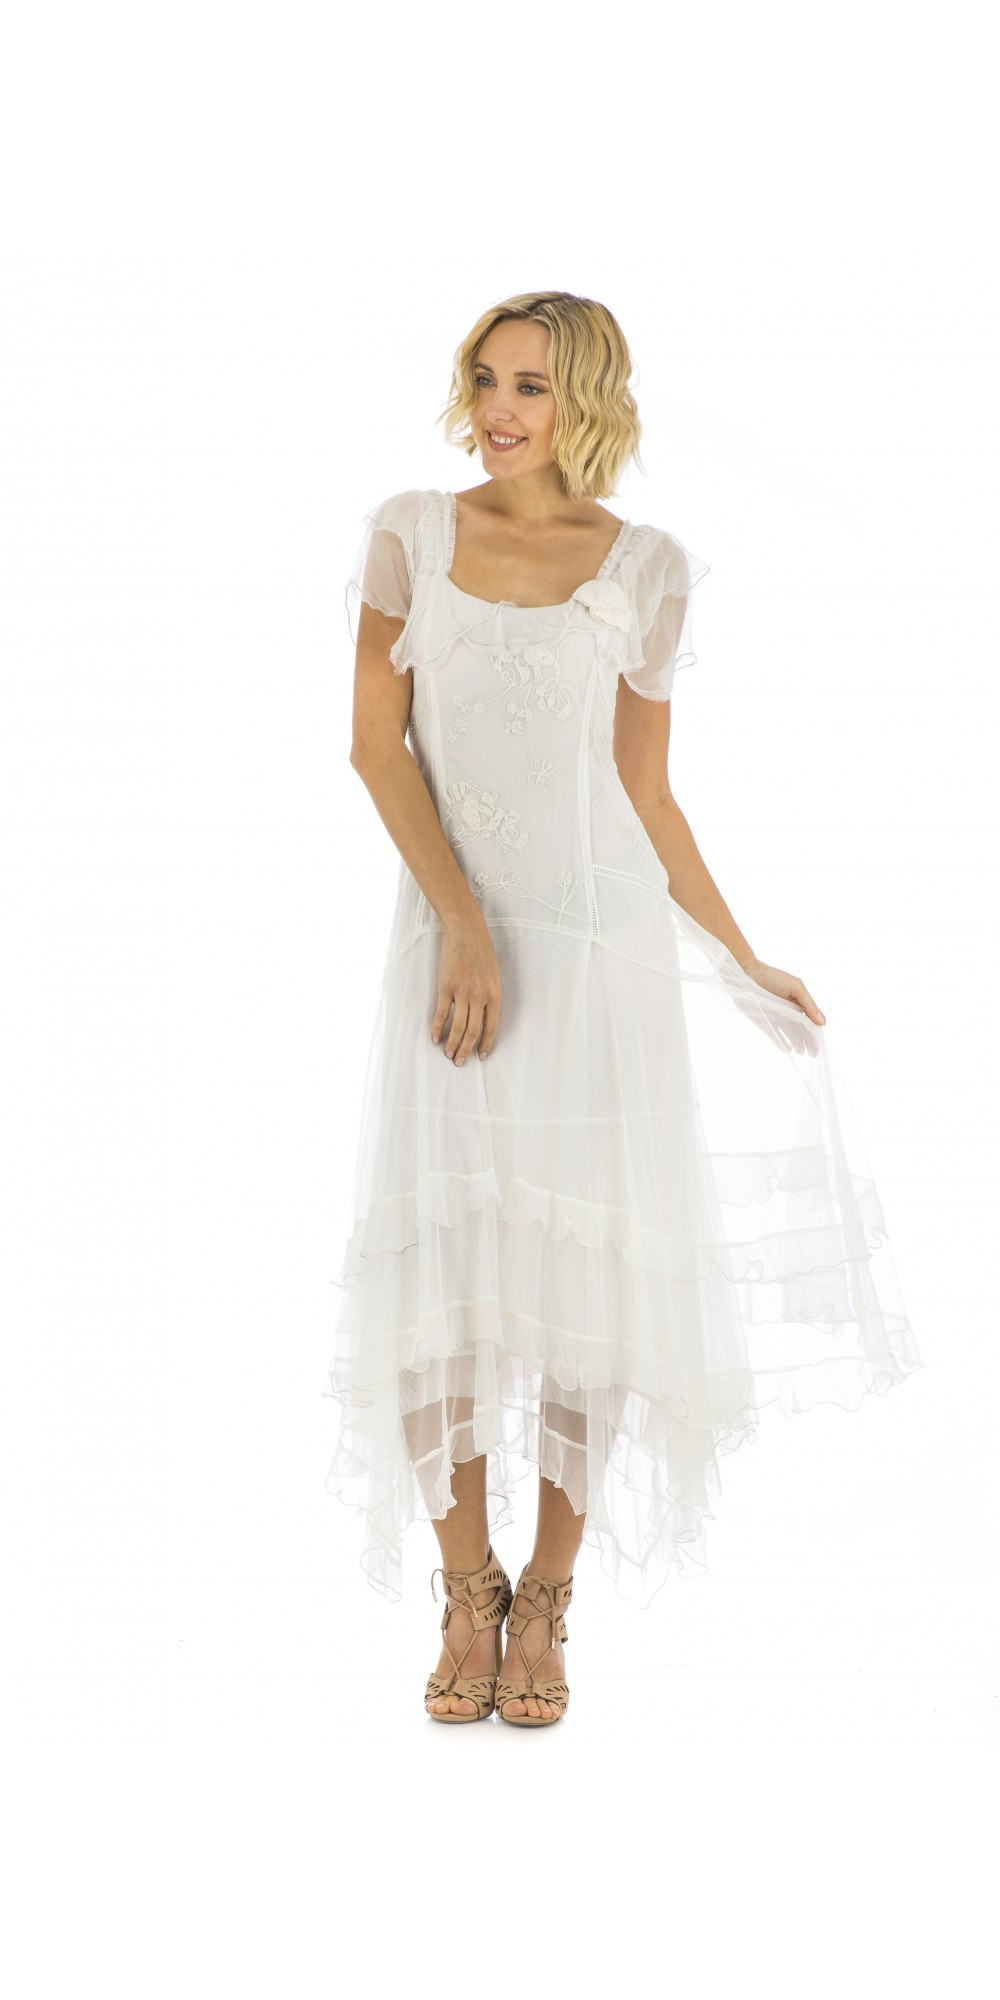 Vintage Inspired Wedding Dress
 Carrie Vintage Inspired Wedding Dress in Ivory by Nataya